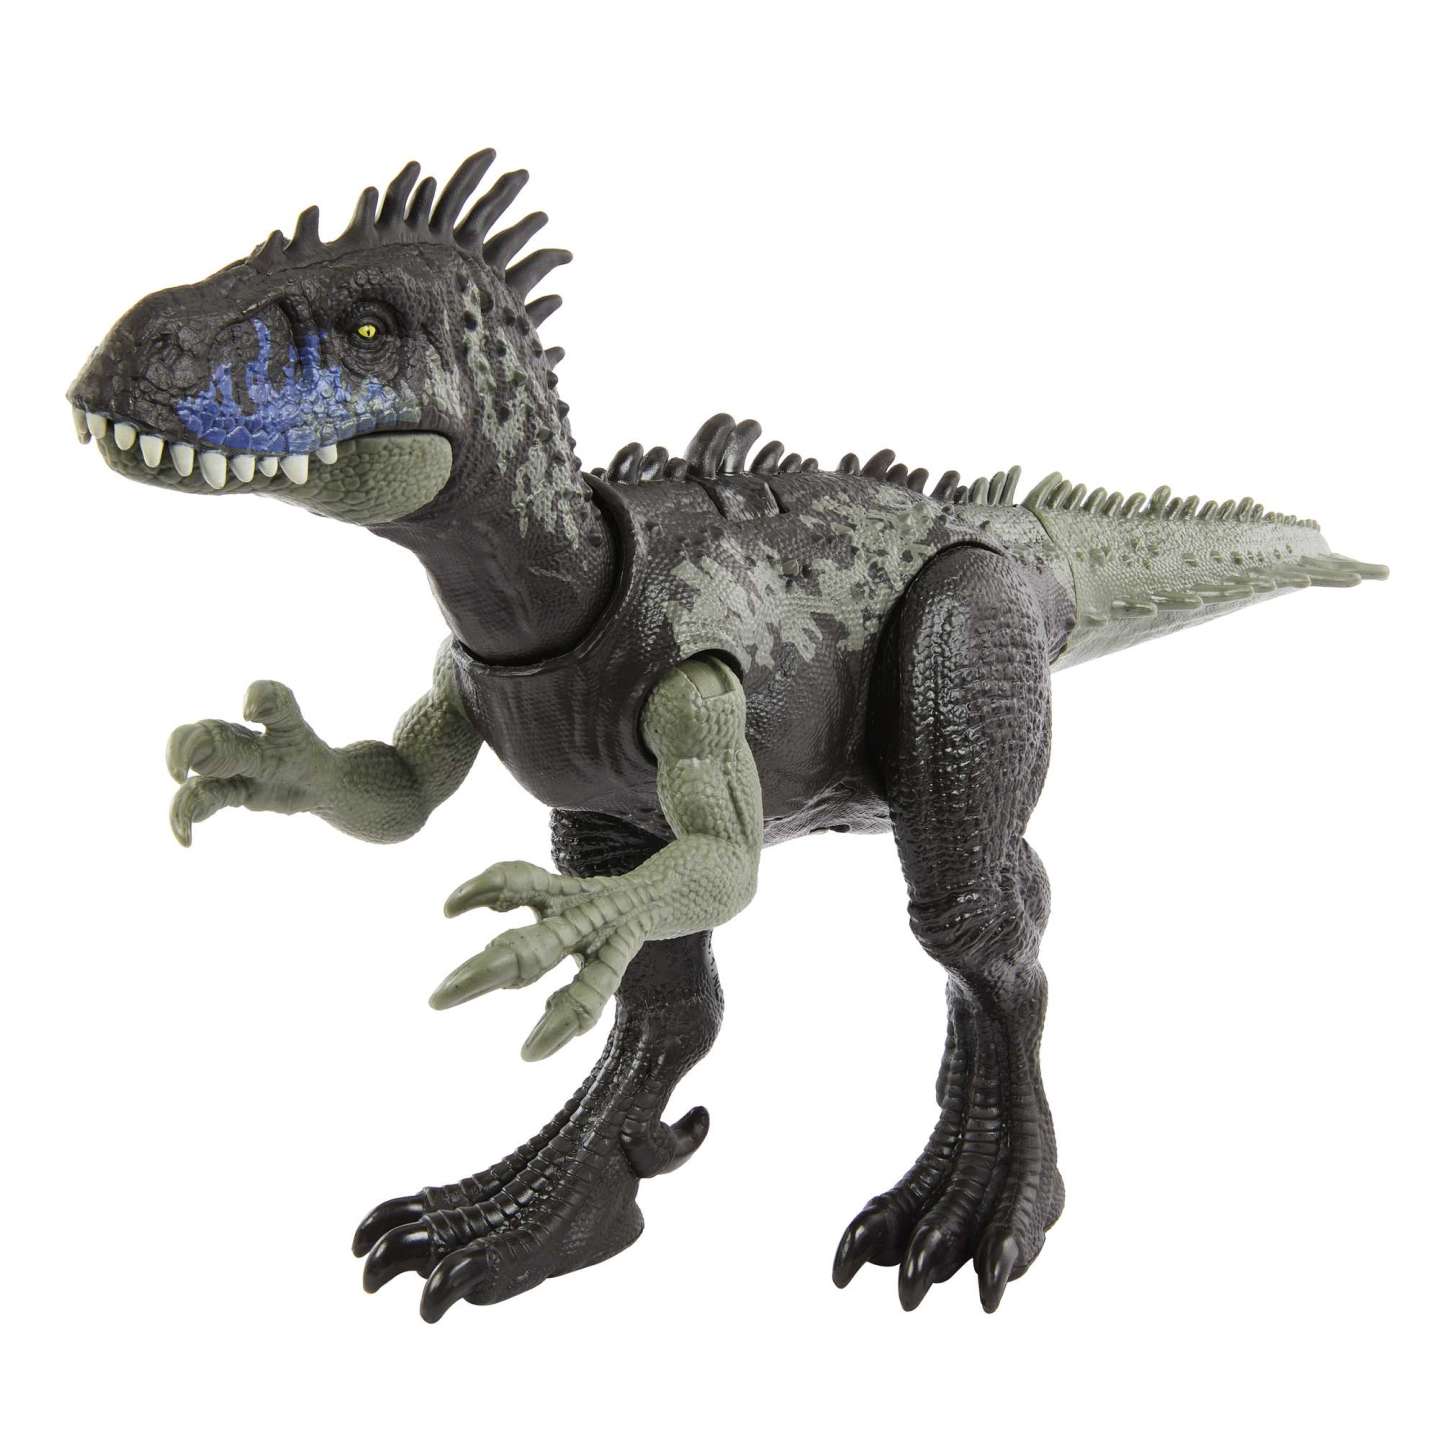 Jurassic World Wild Roar Dryptosaurus Mattel HLP15  Mattel   